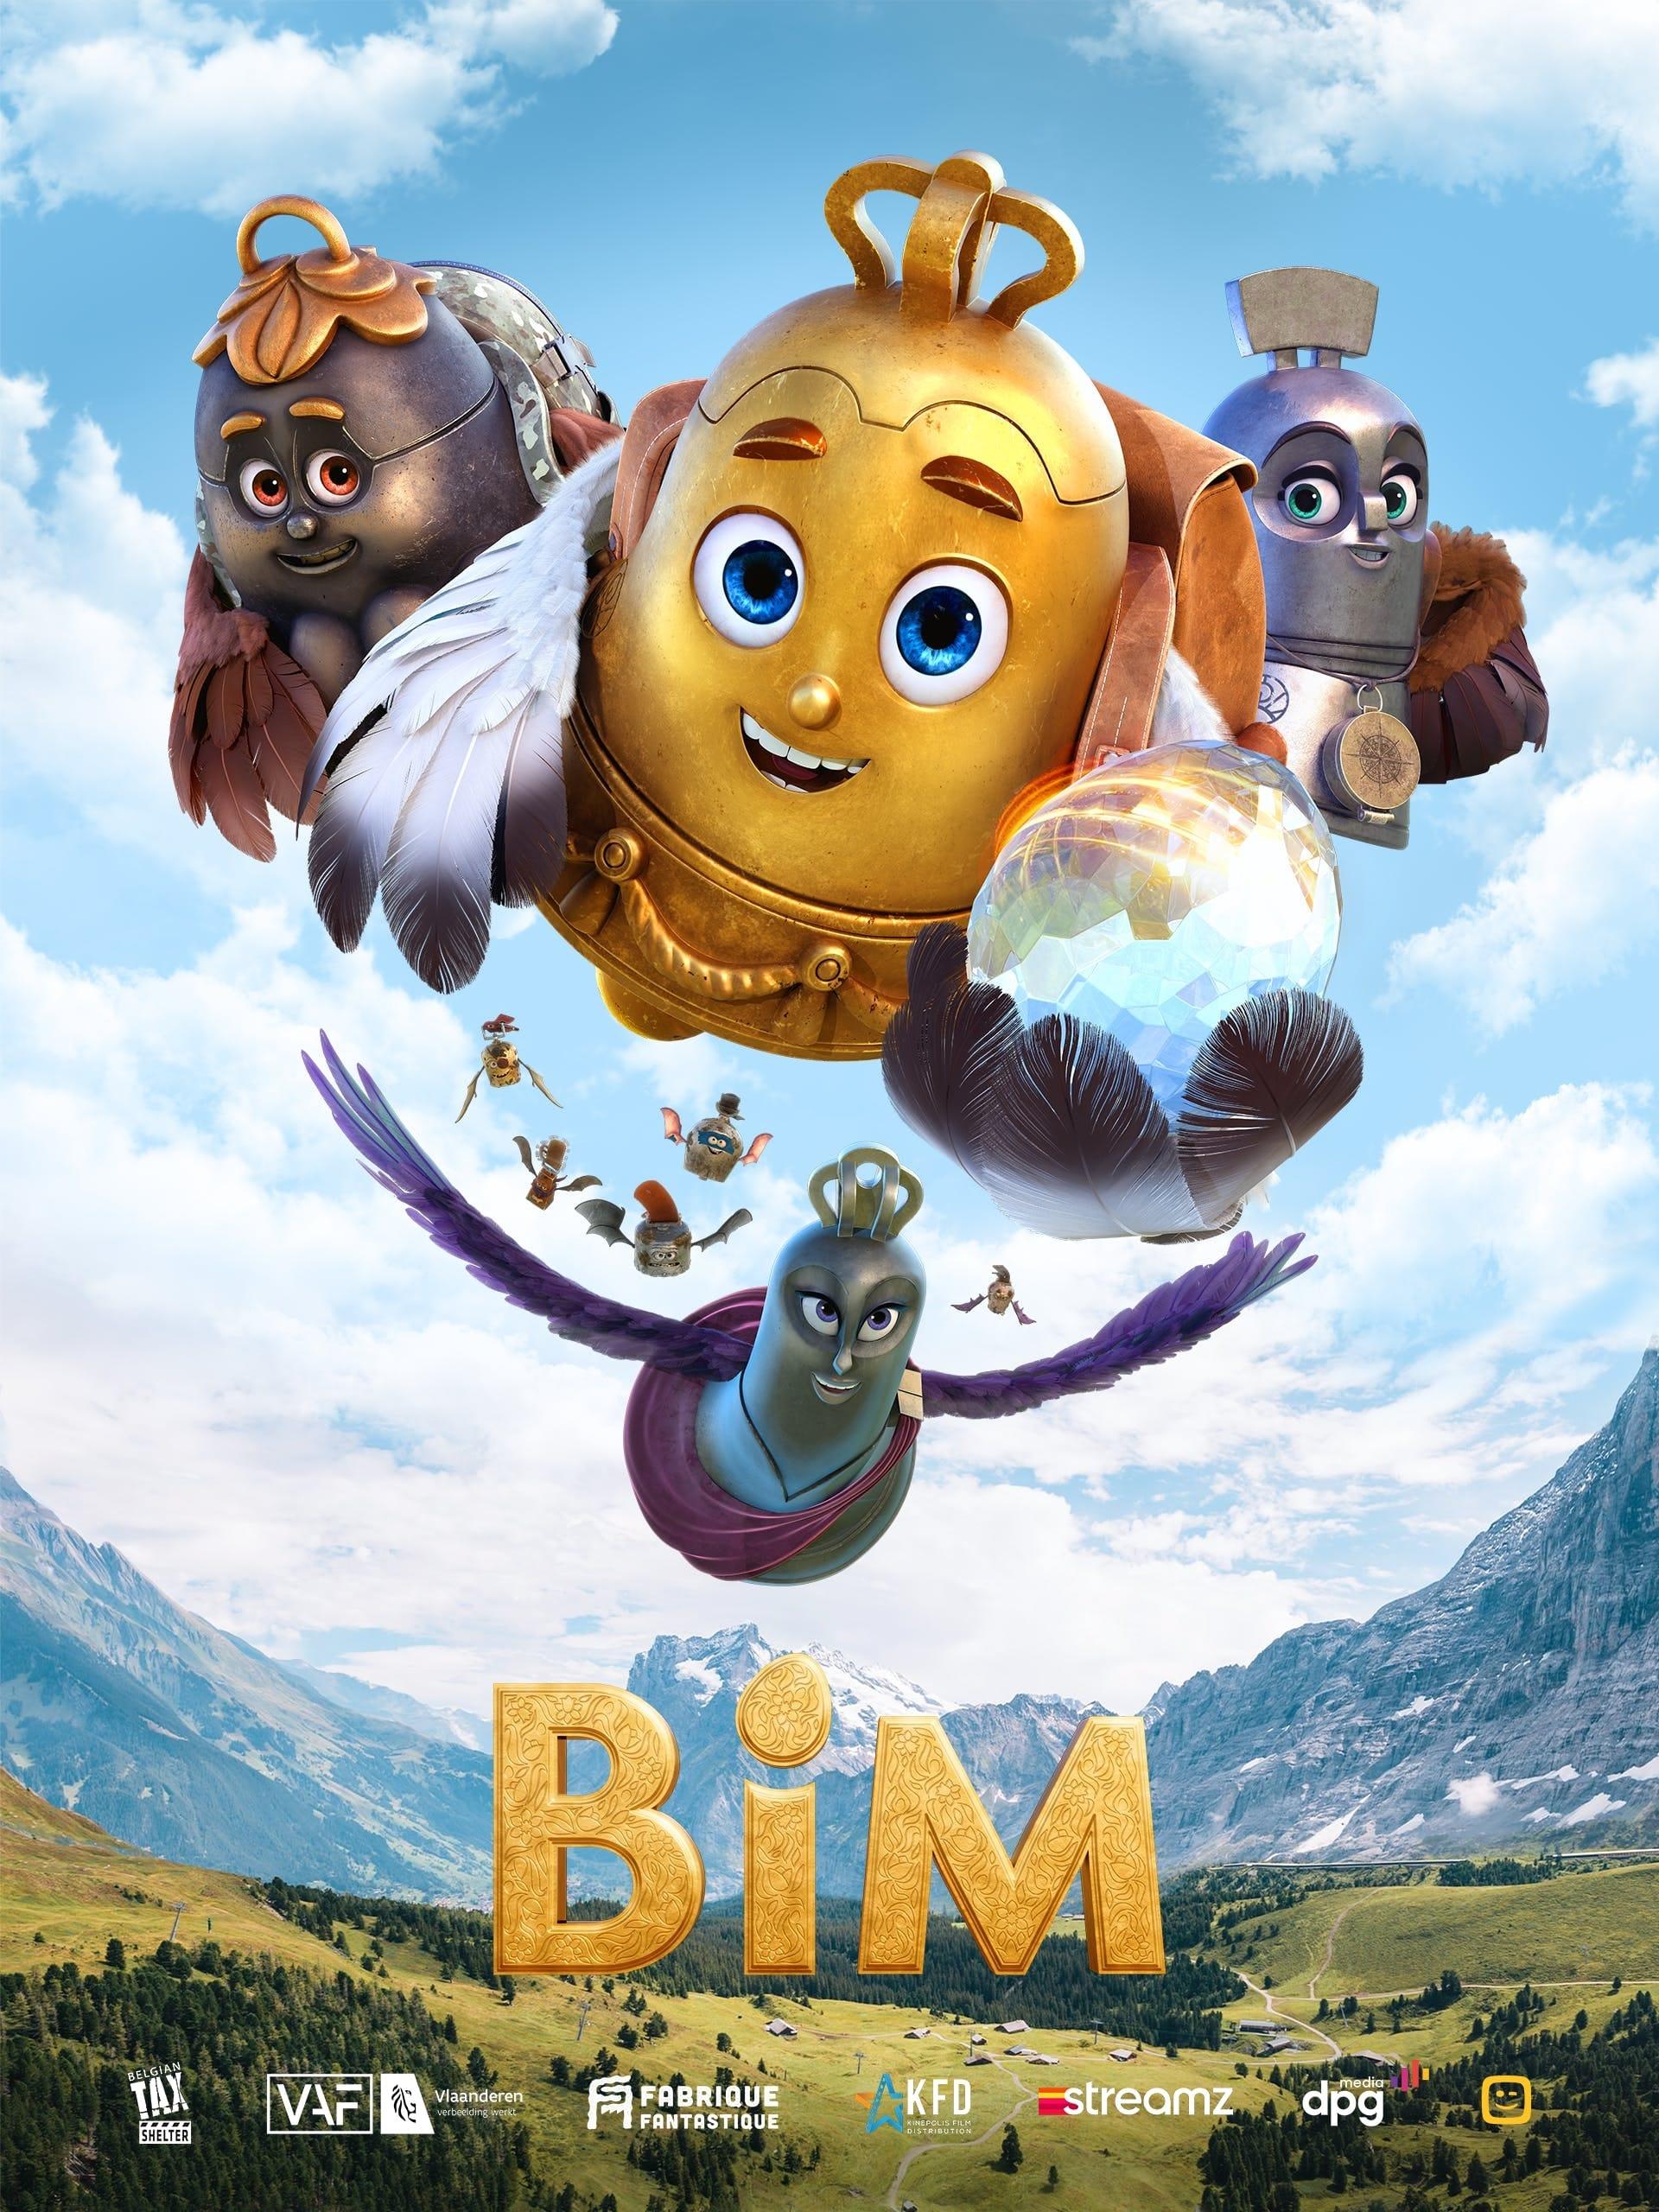 Bim poster